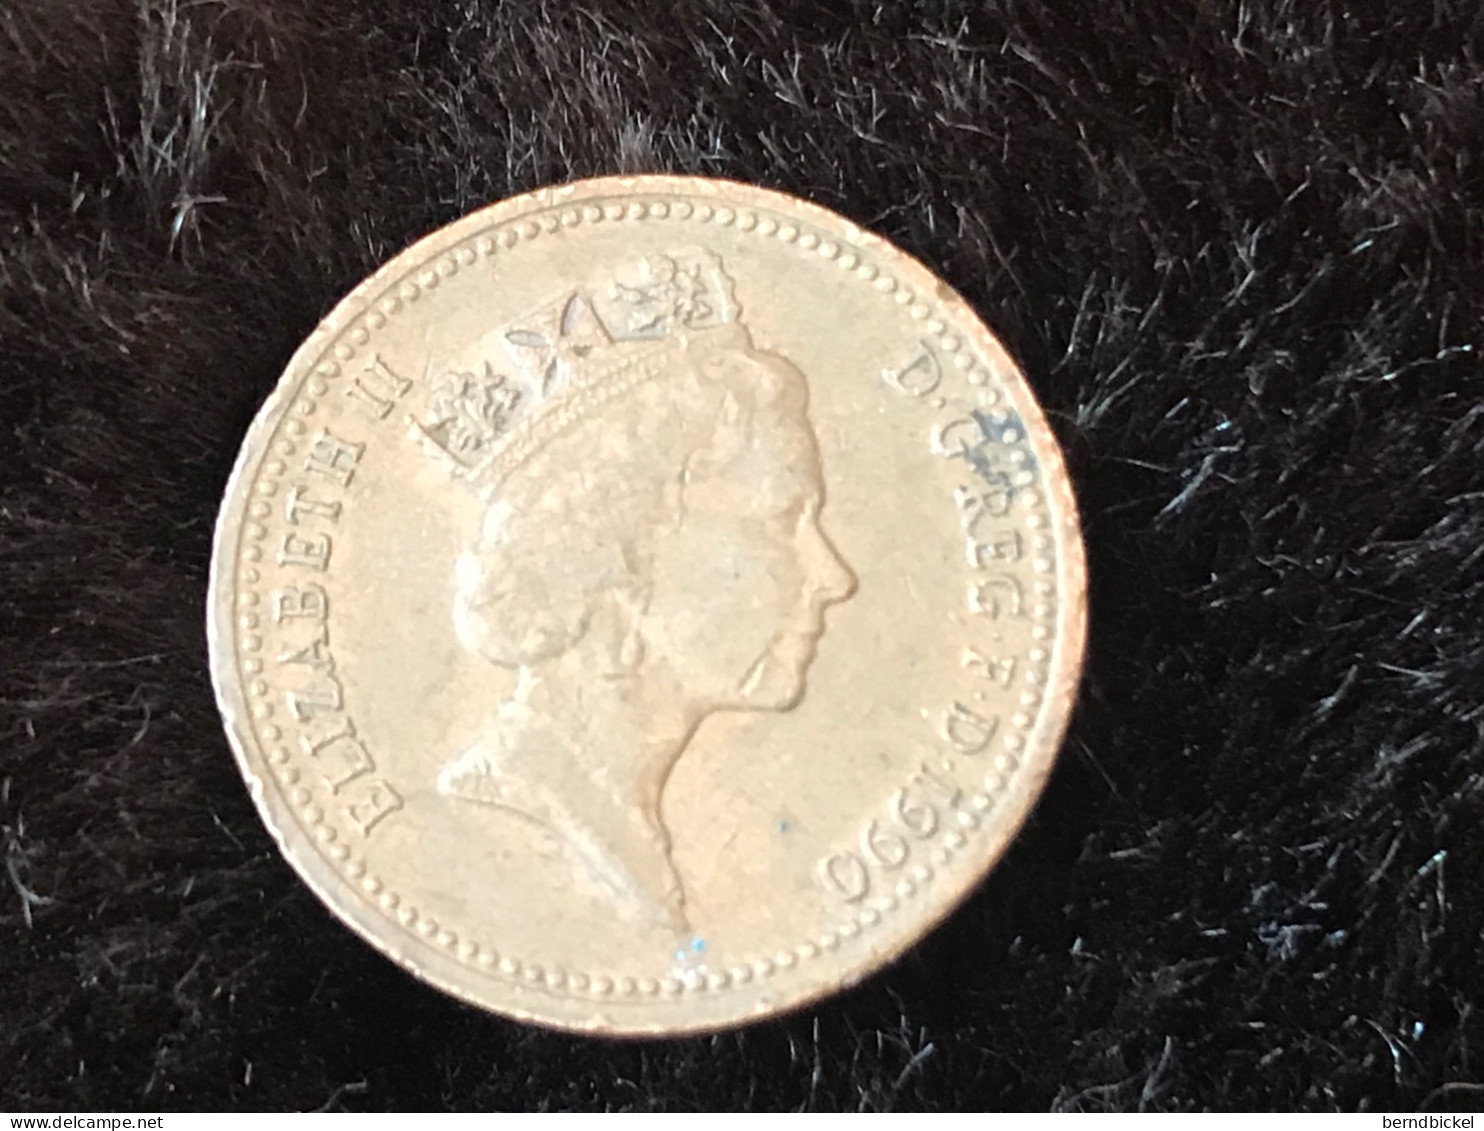 Münze Münzen Umlaufmünze Großbritannien 1 Penny 1990 - 1 Penny & 1 New Penny